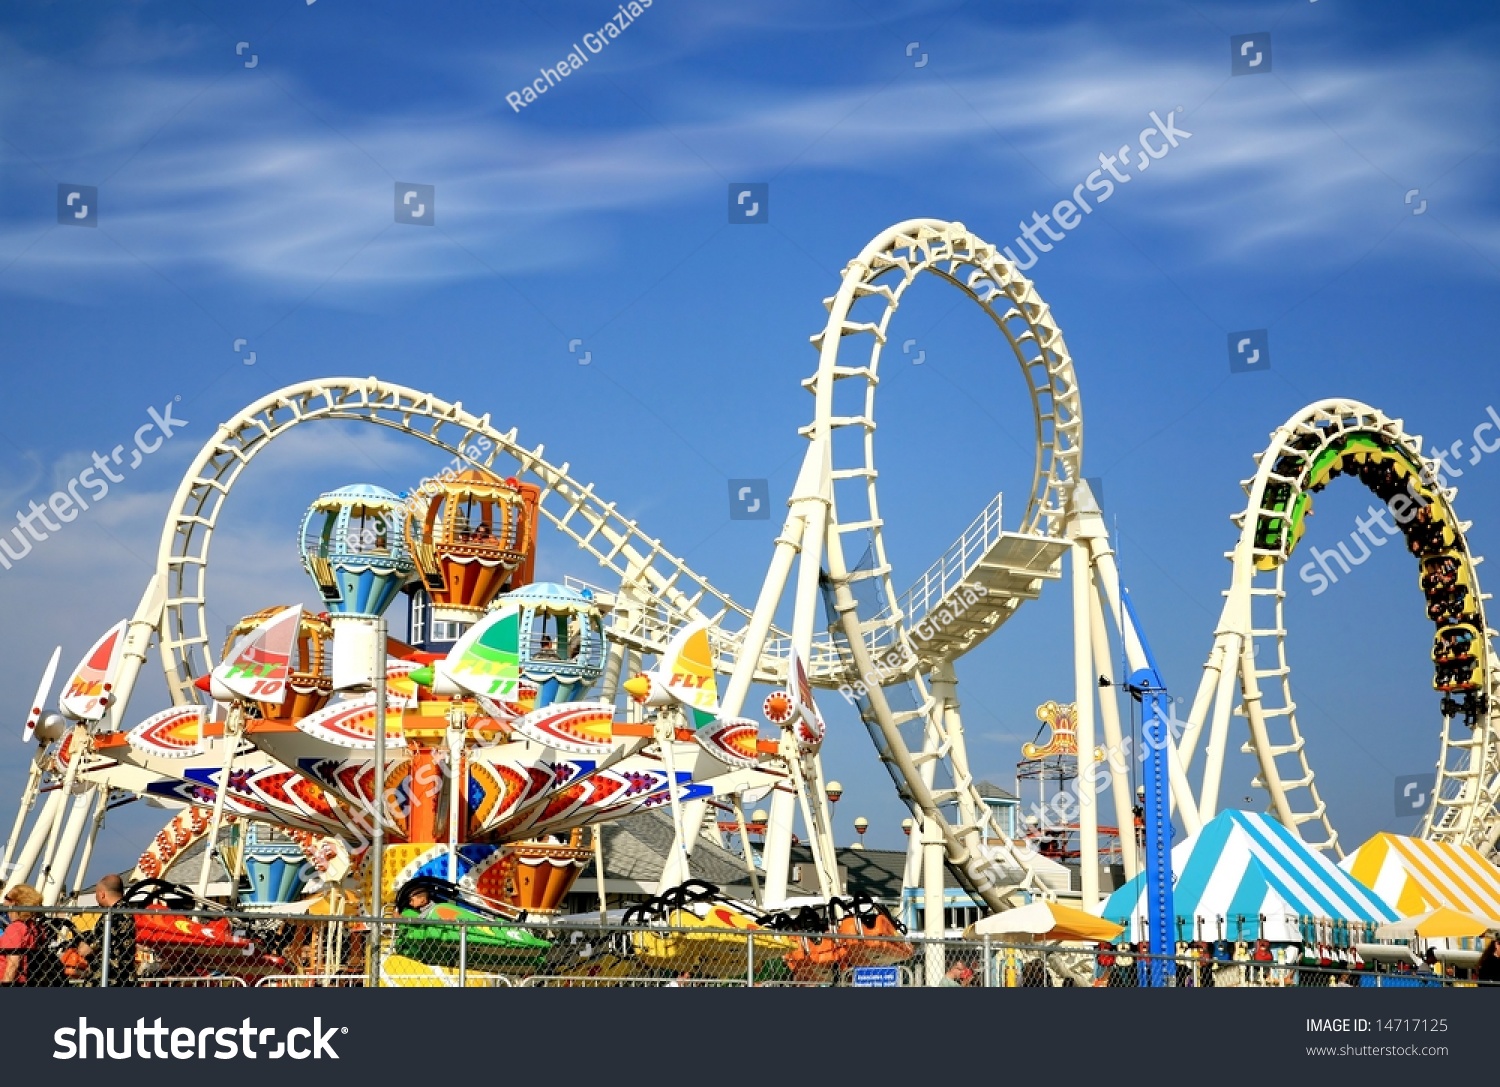 Amusement Park Rides Very Blue Sky Stock Photo 14717125 - Shutterstock